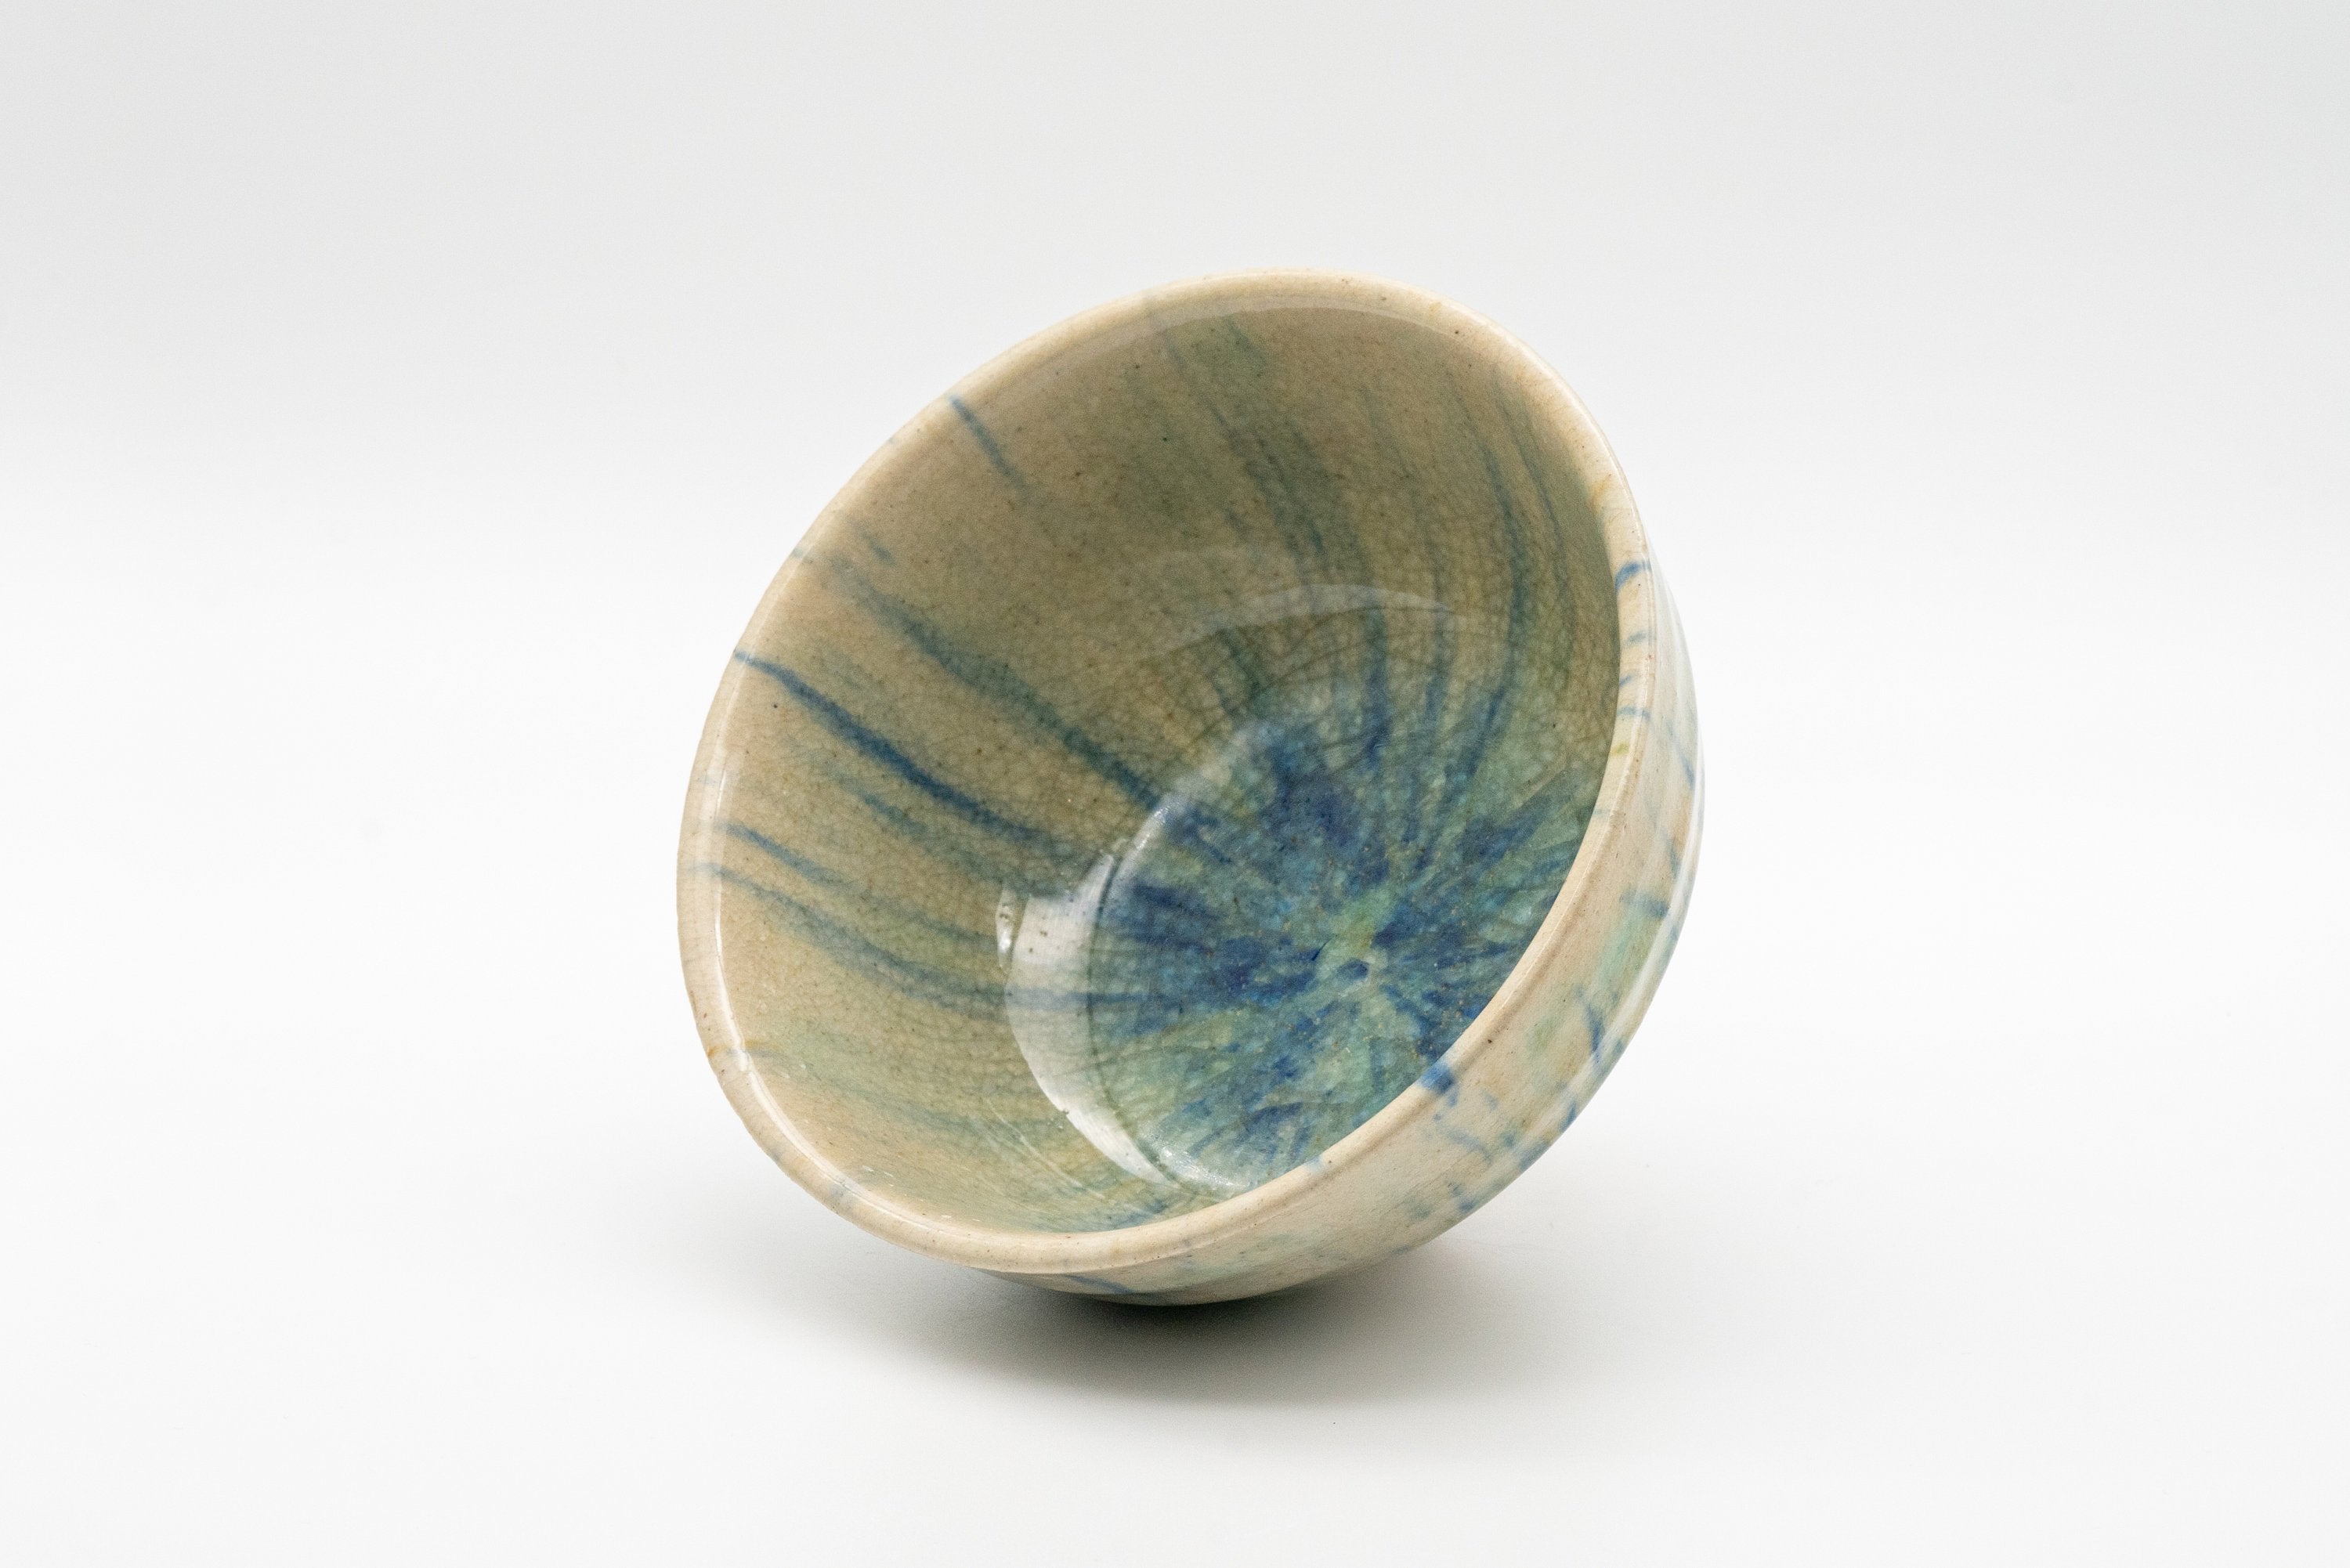 Japanese Matcha Bowl - Blue Striped Wan-nari Chawan - 275ml